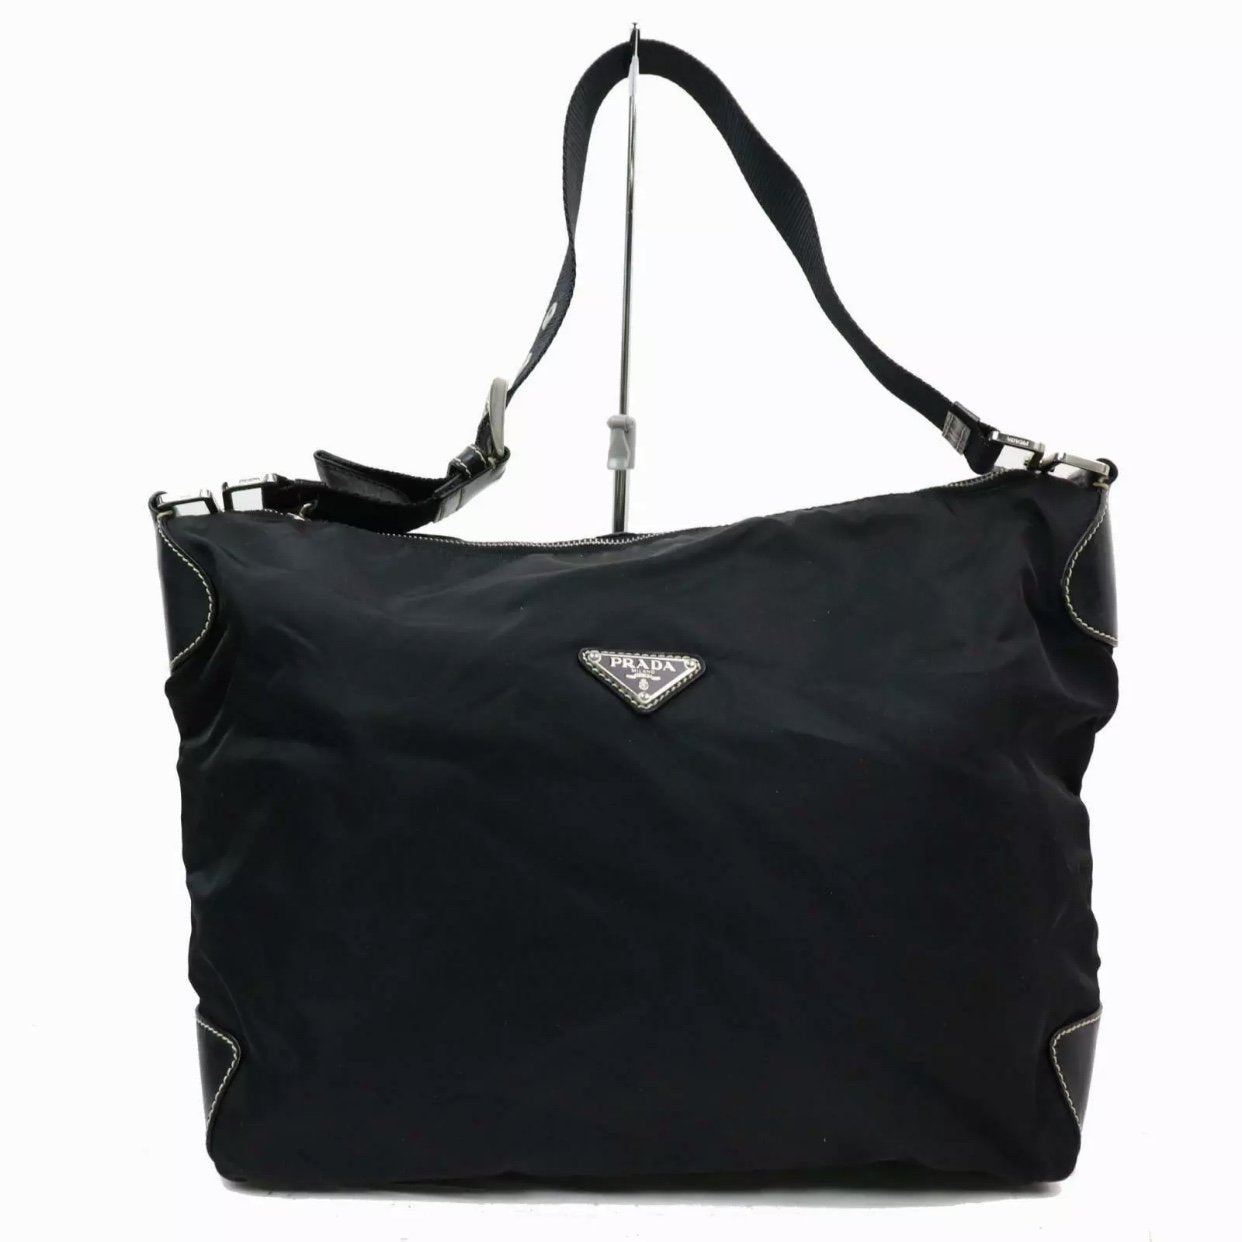 100% Authenticity Guaranteed - Prada Nylon Leather Hand Bag – Just